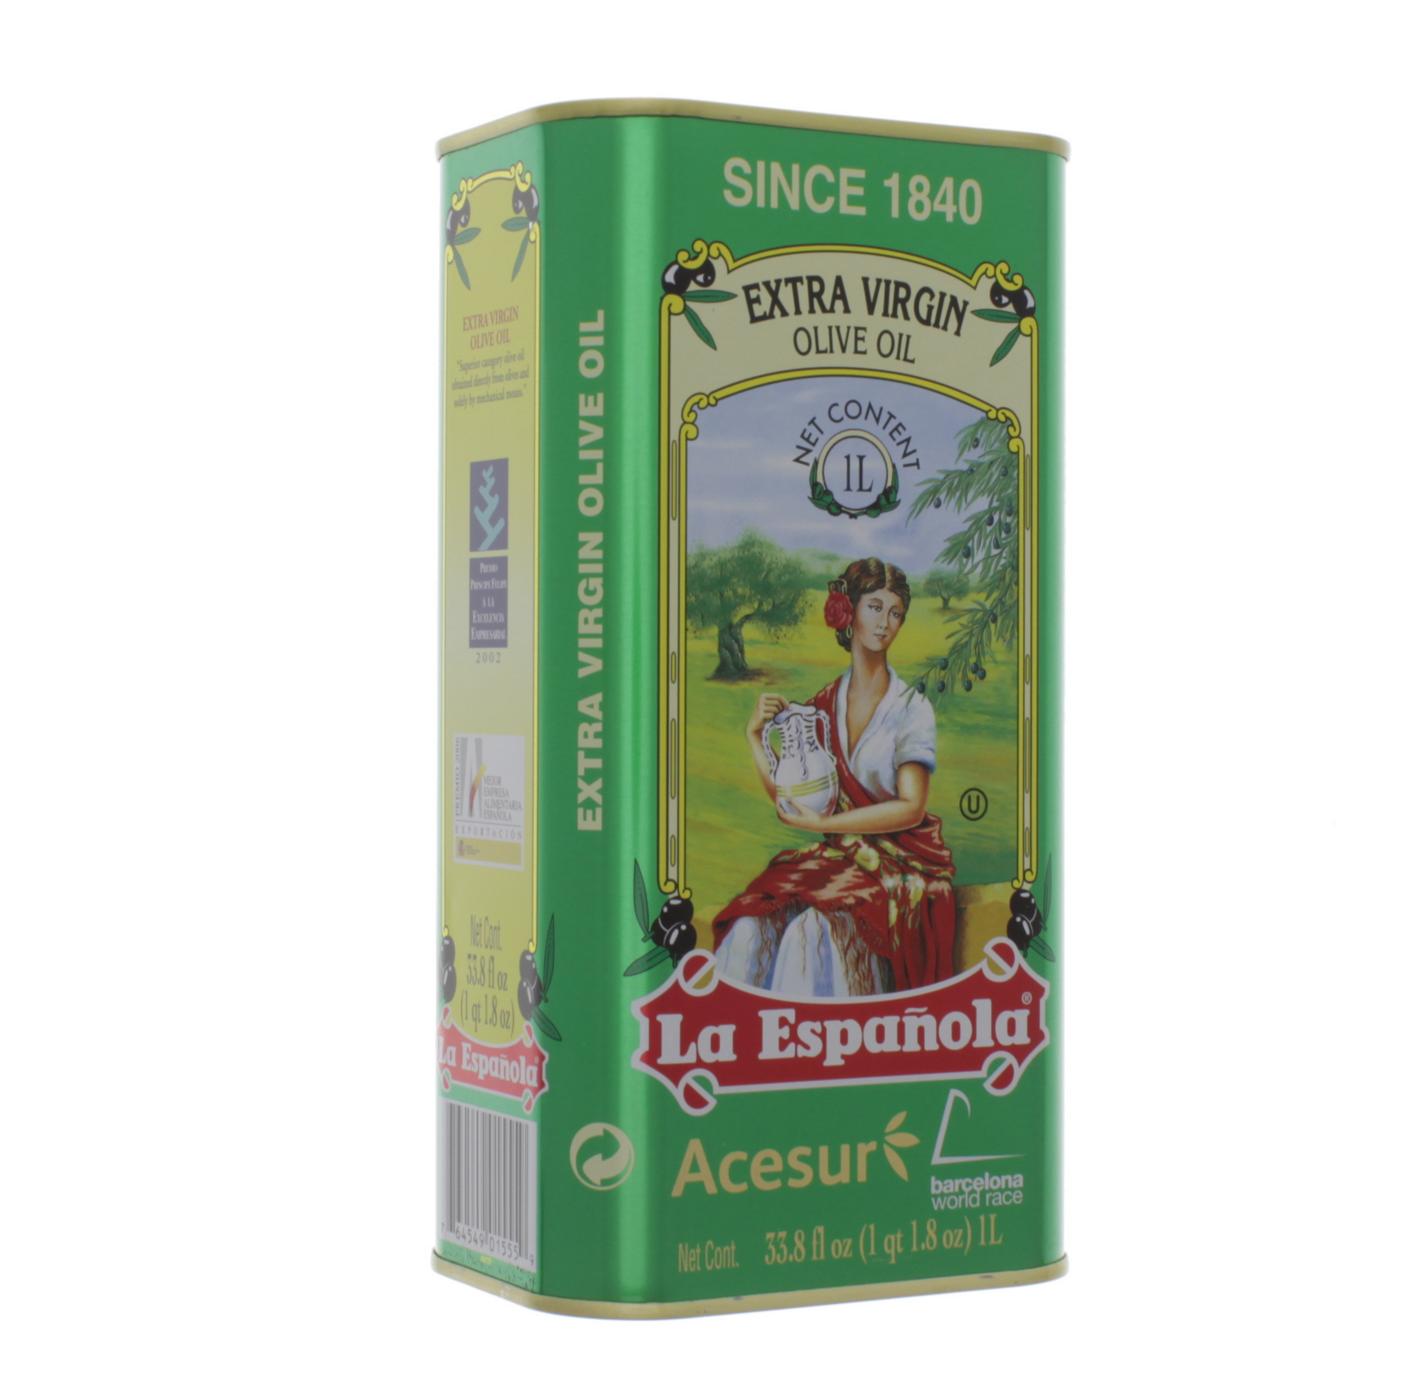 La Espanola Extra Virgin Olive Oil; image 1 of 2